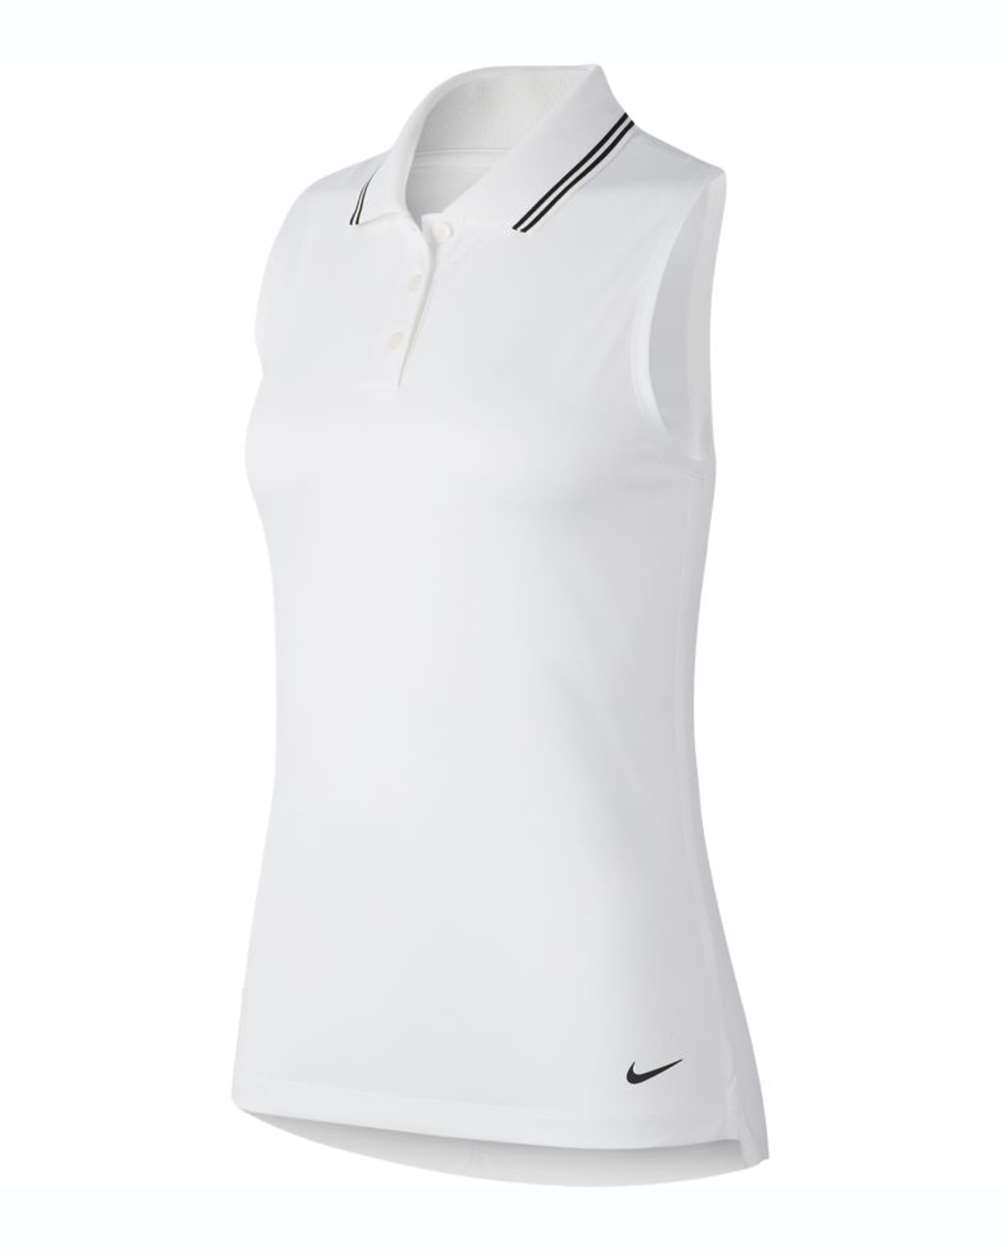 Womens Nike Sleeveless Golf Shirt (Size XL Only)